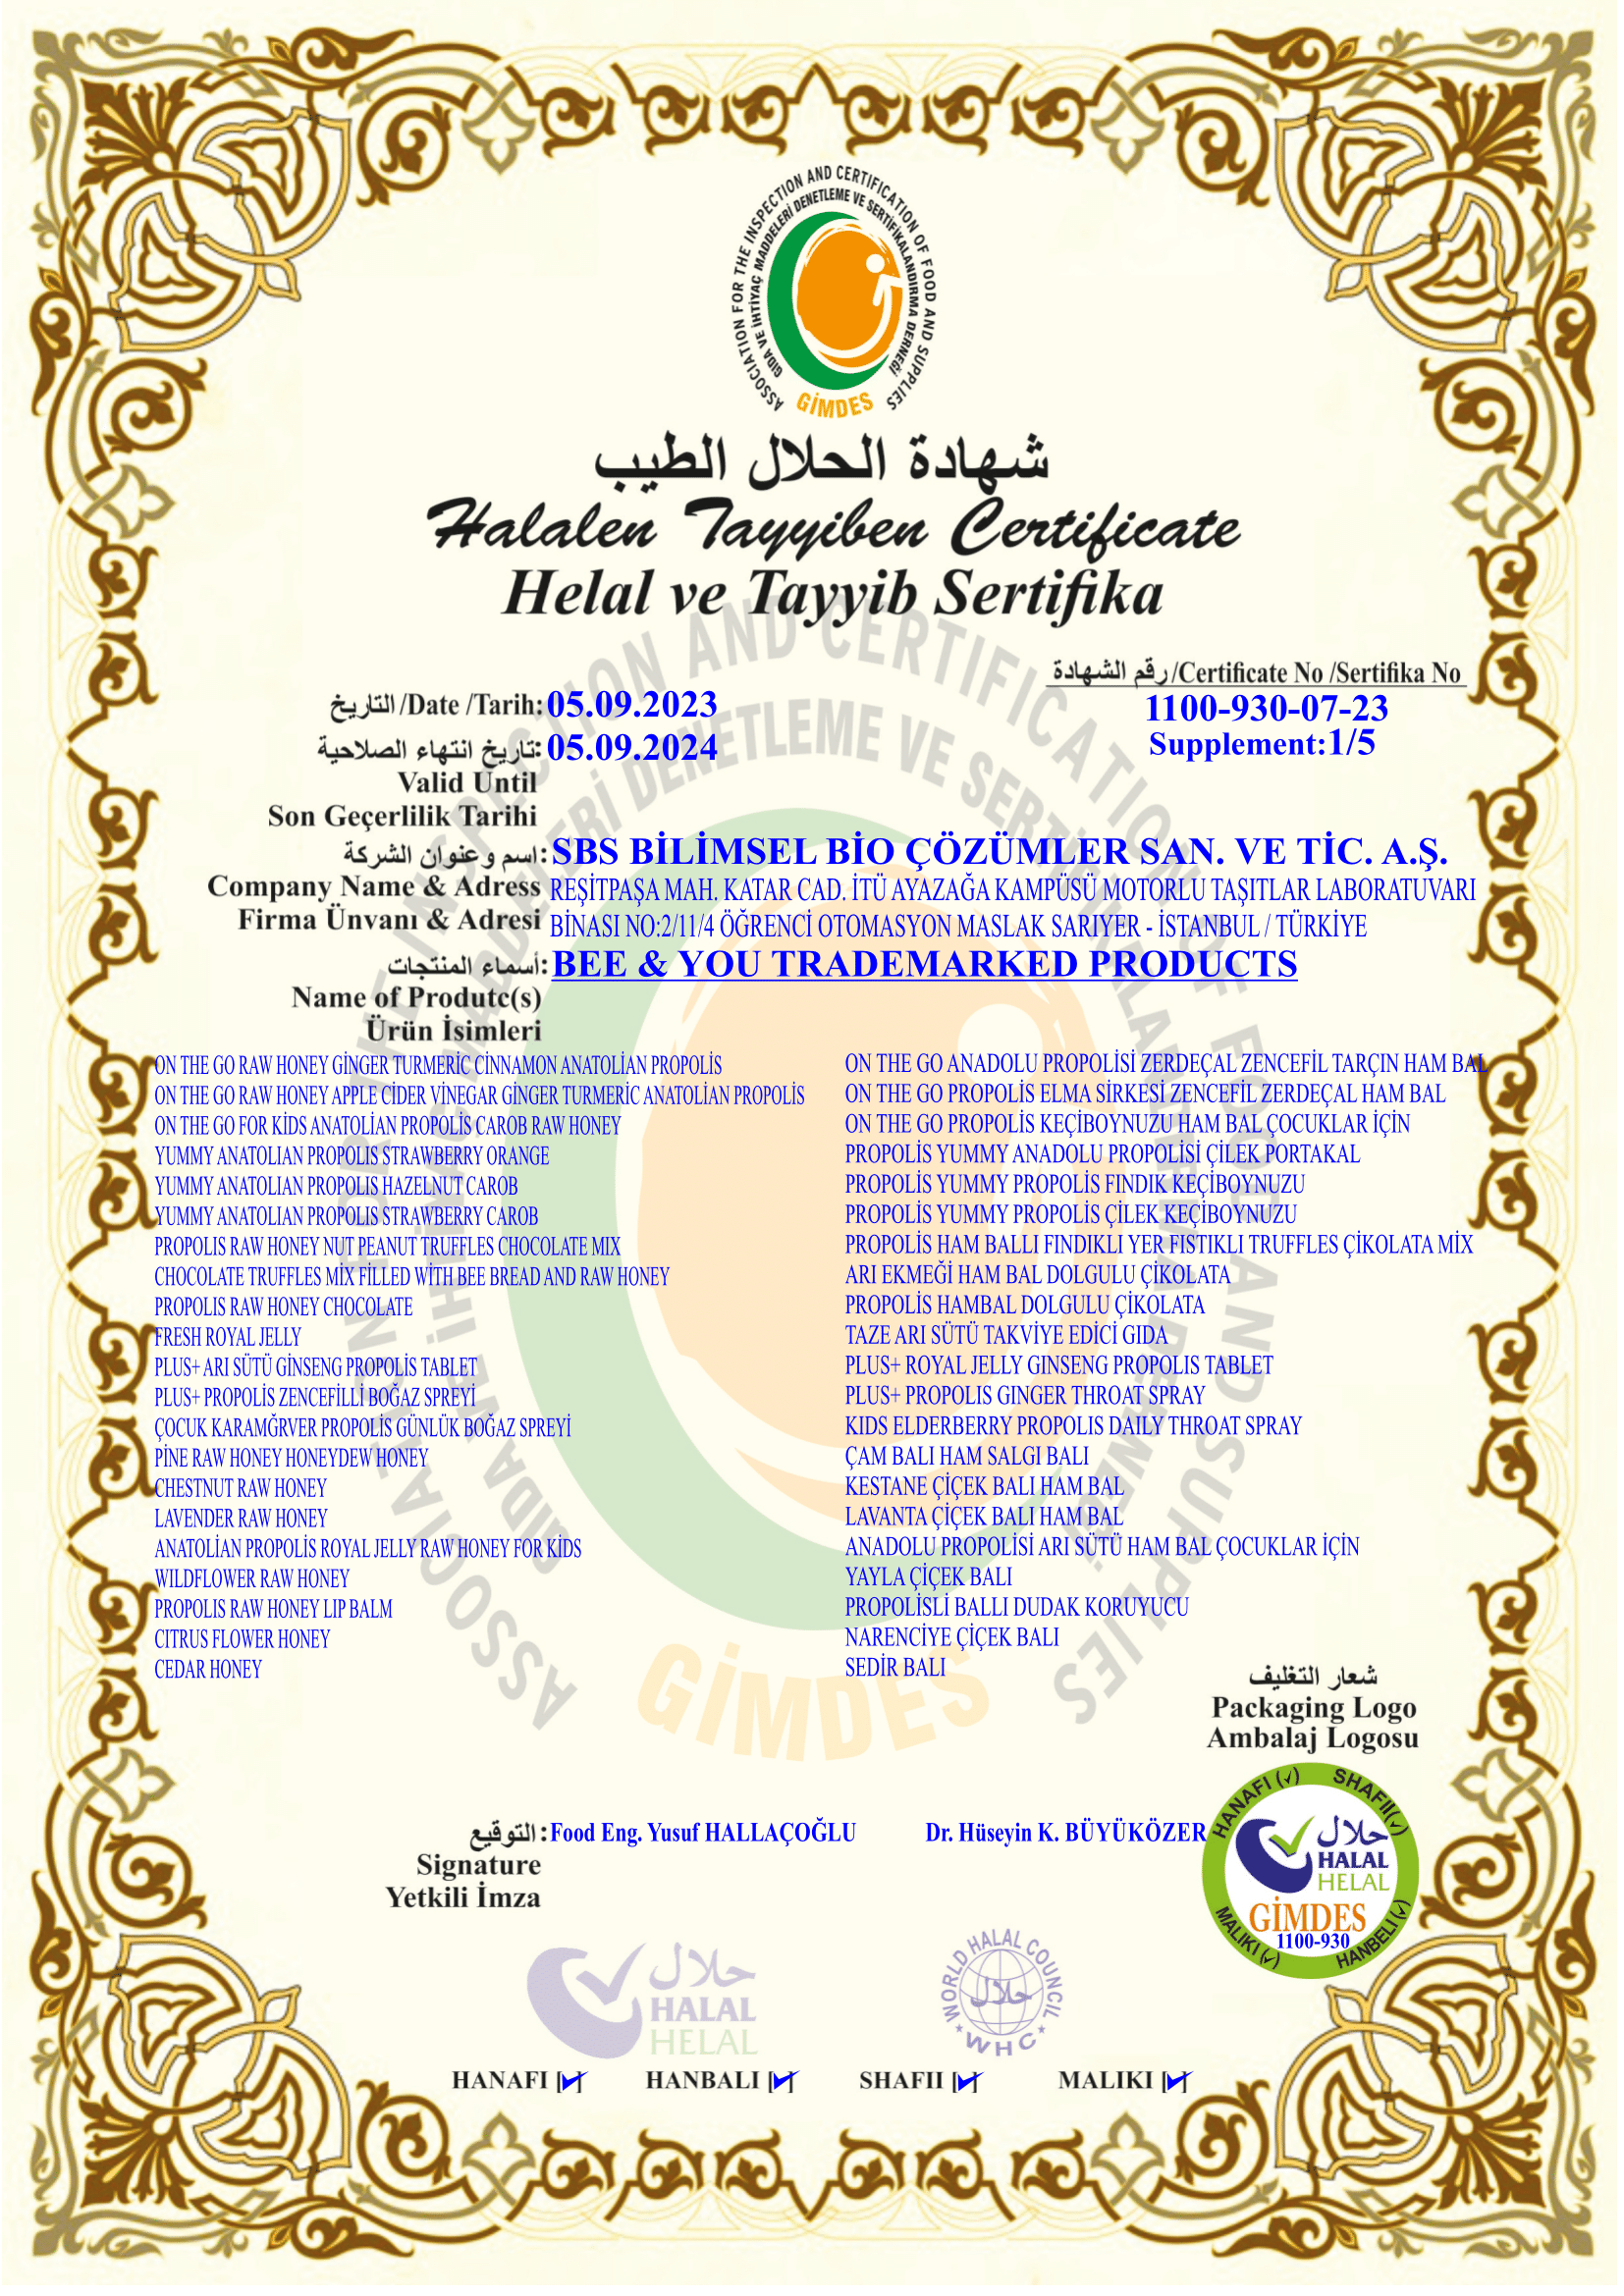 Helal Certificate